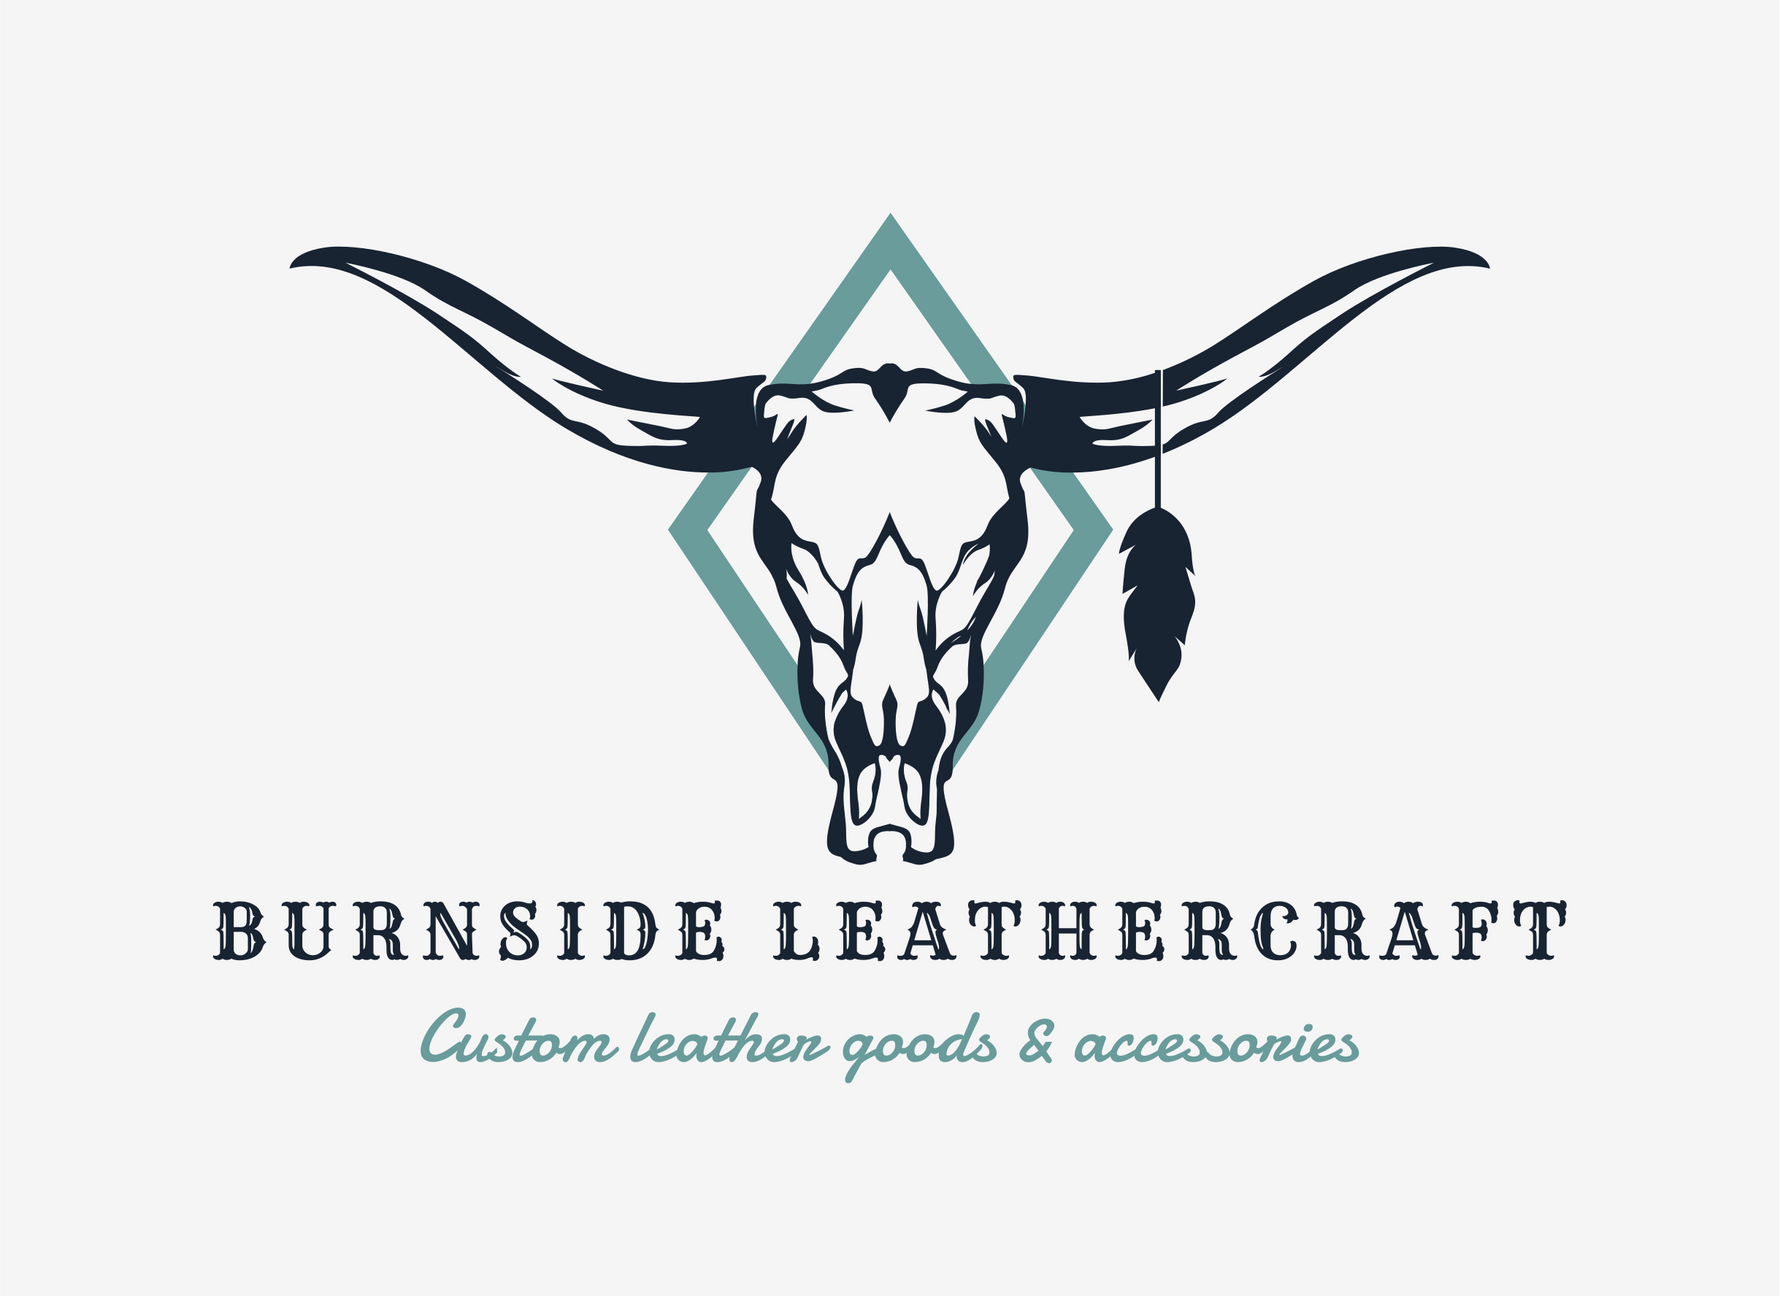 Burnside Leathercraft – burnsideleathercraft.com